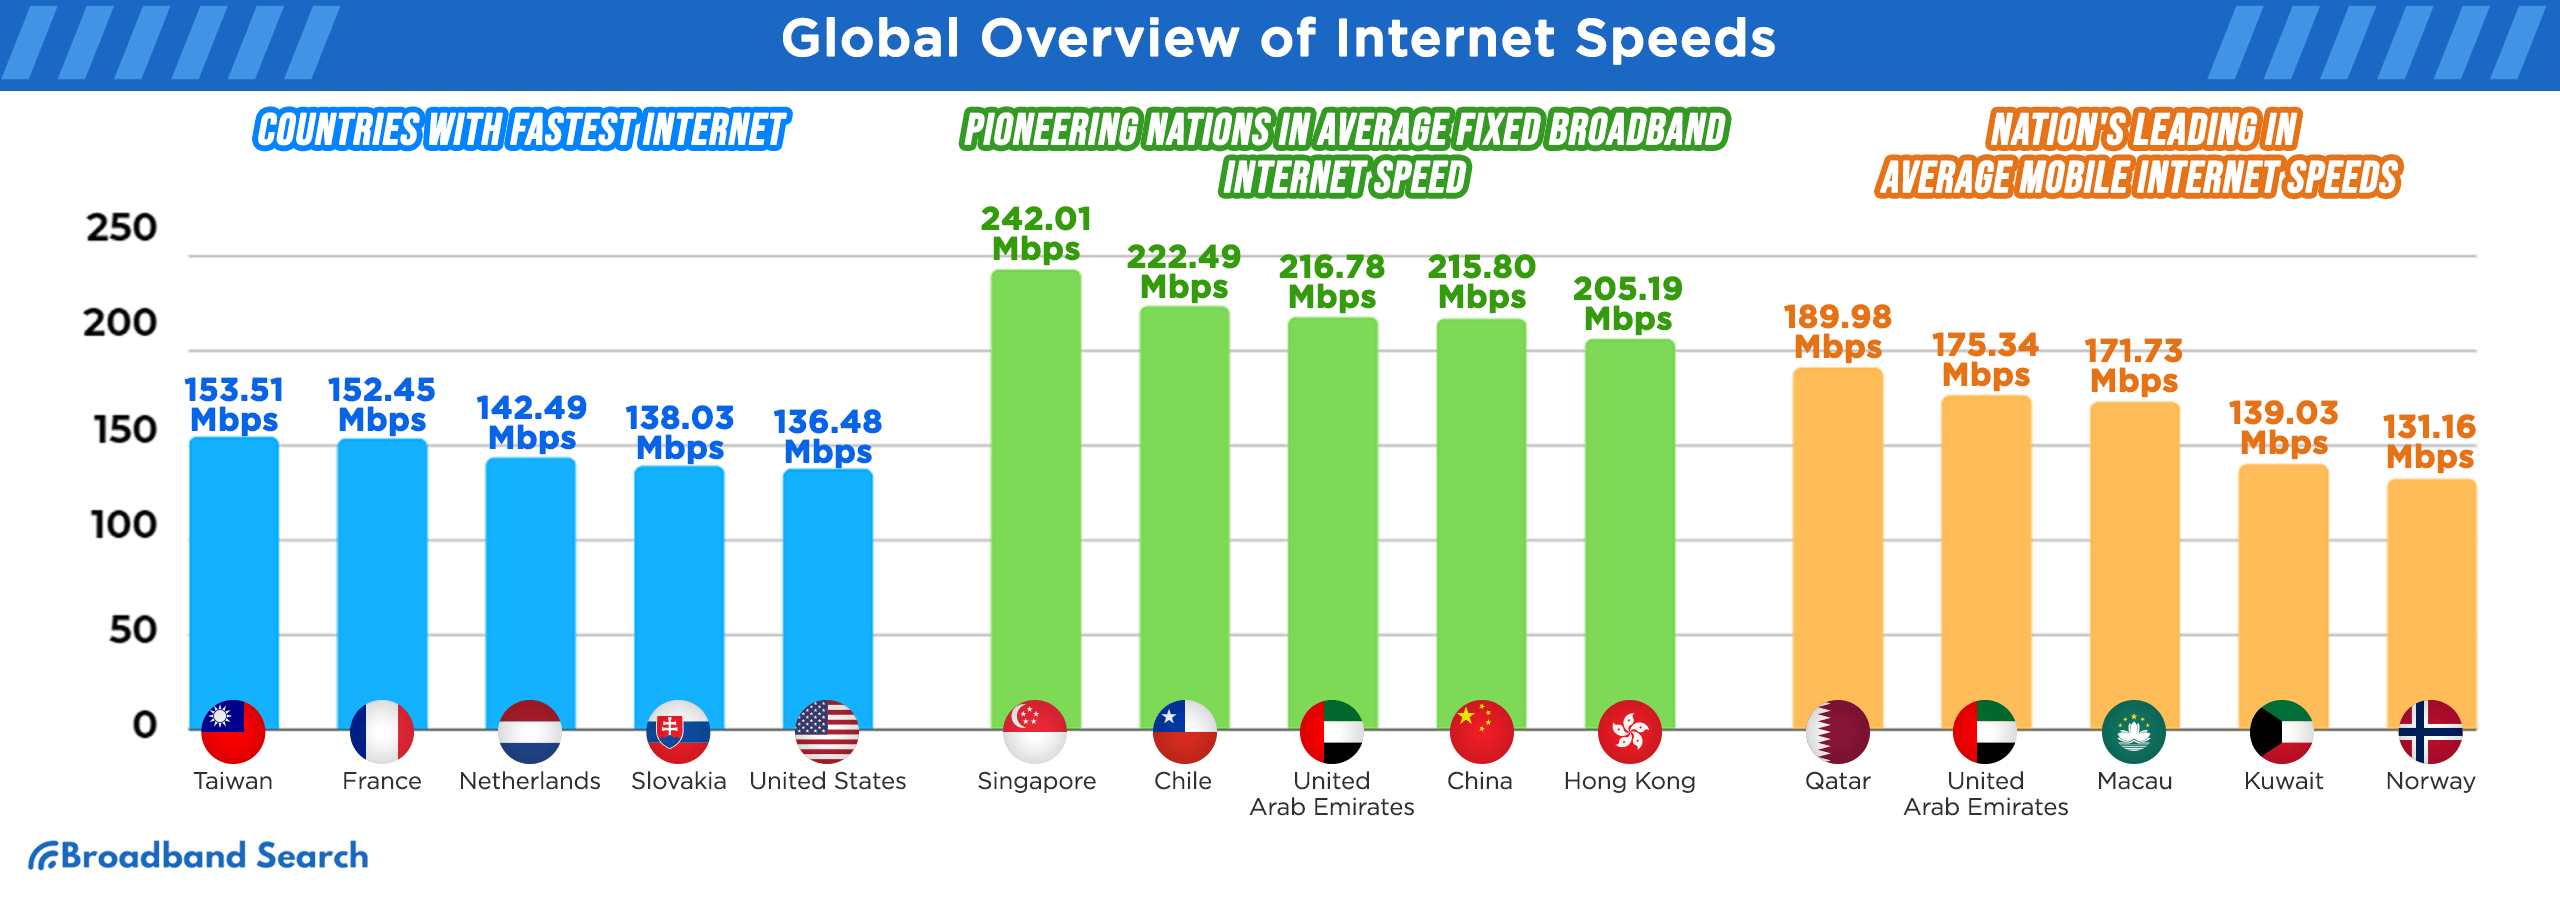 Global Overview of Internet Speeds